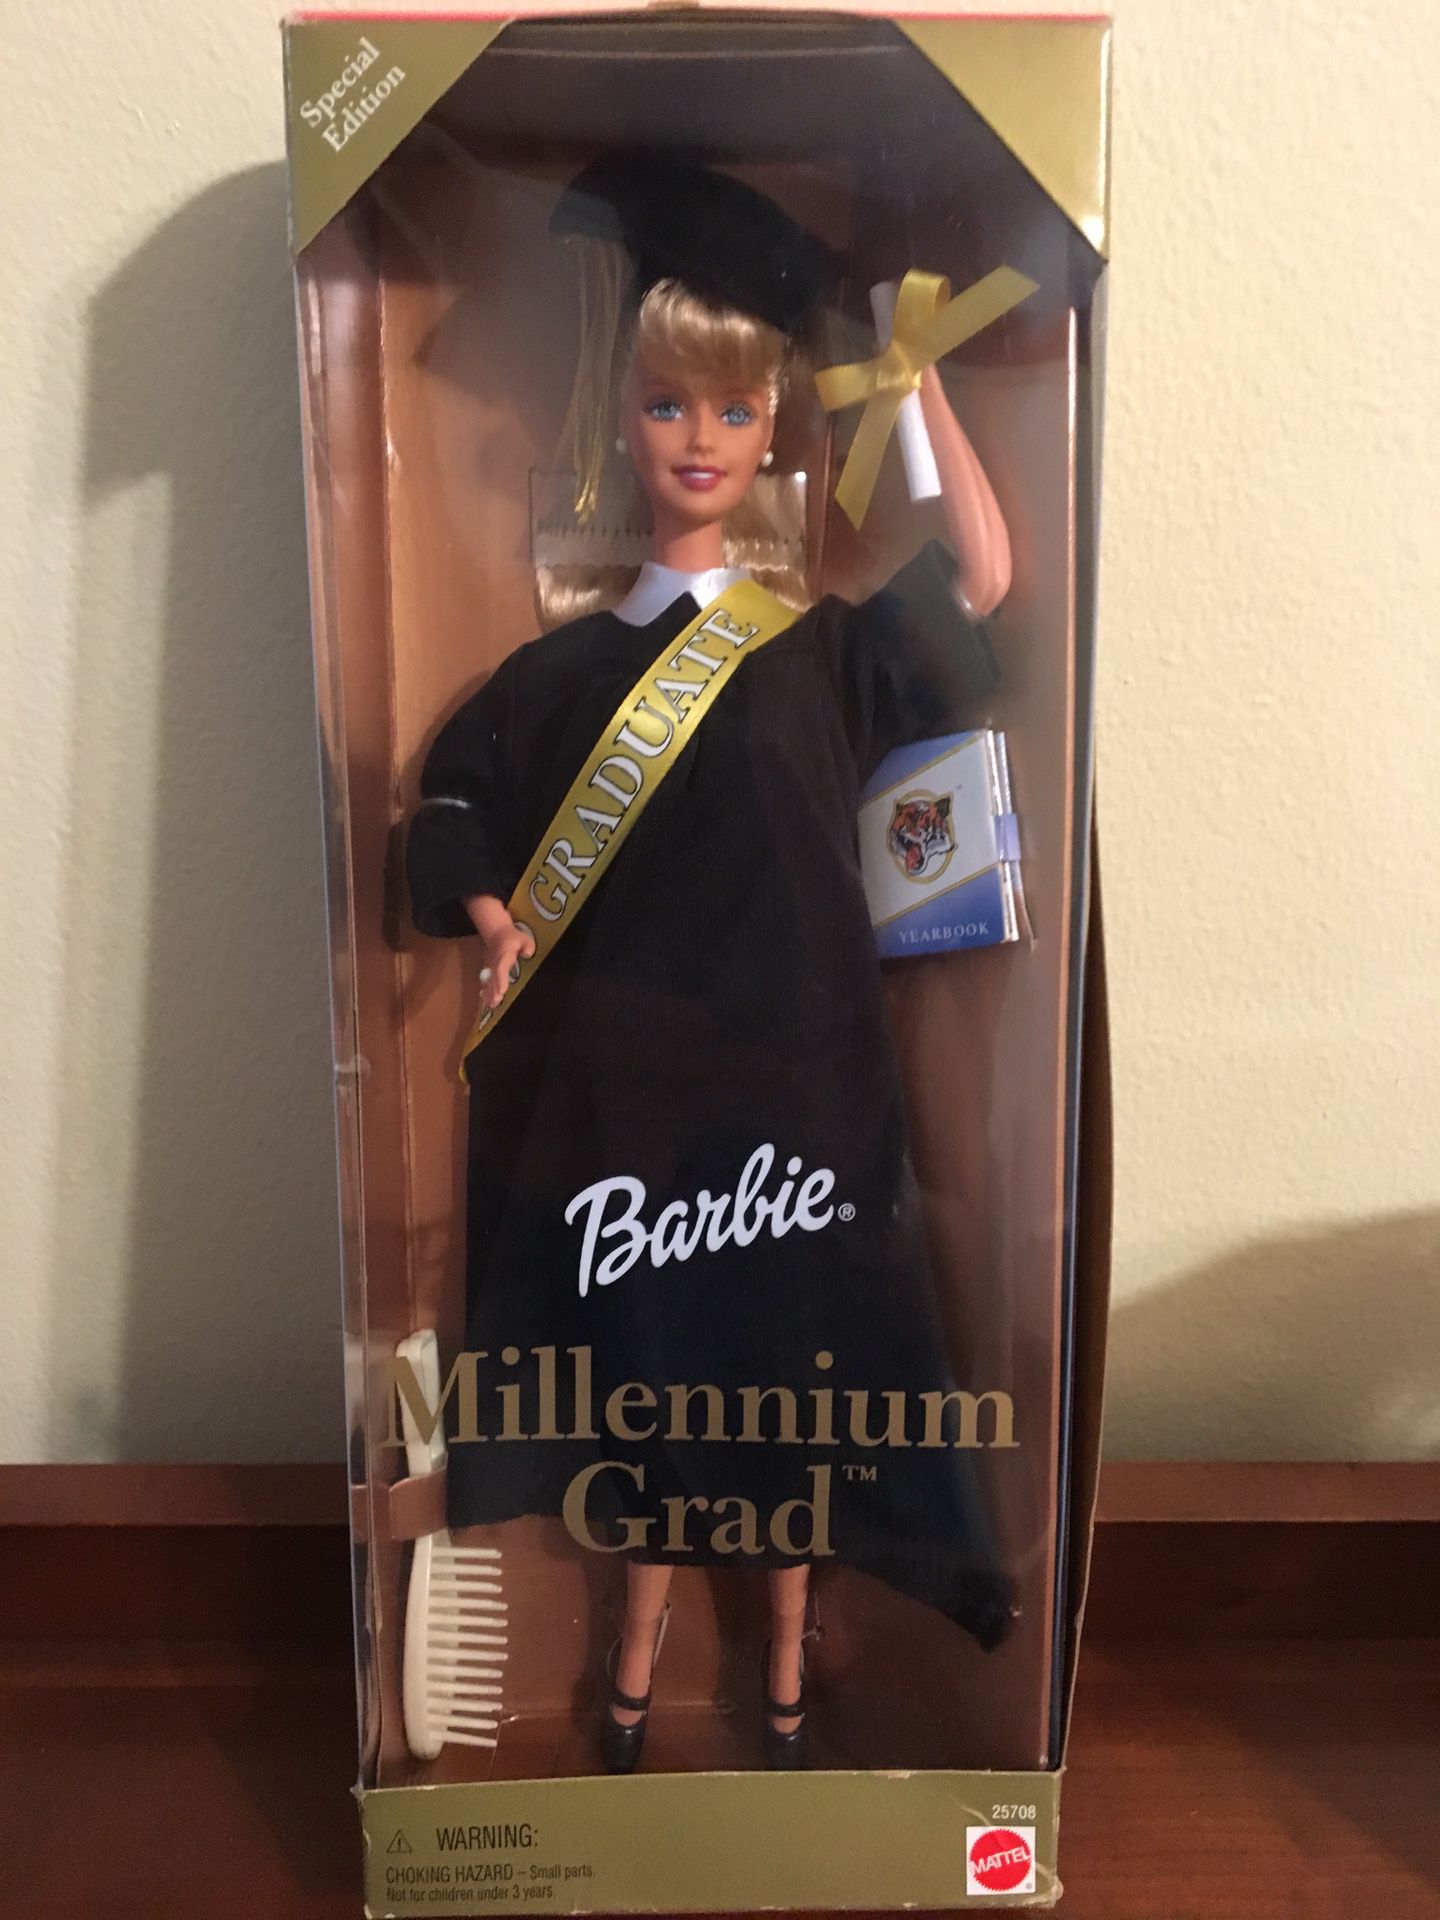 Mattel Millennium Graduate Barbie Doll